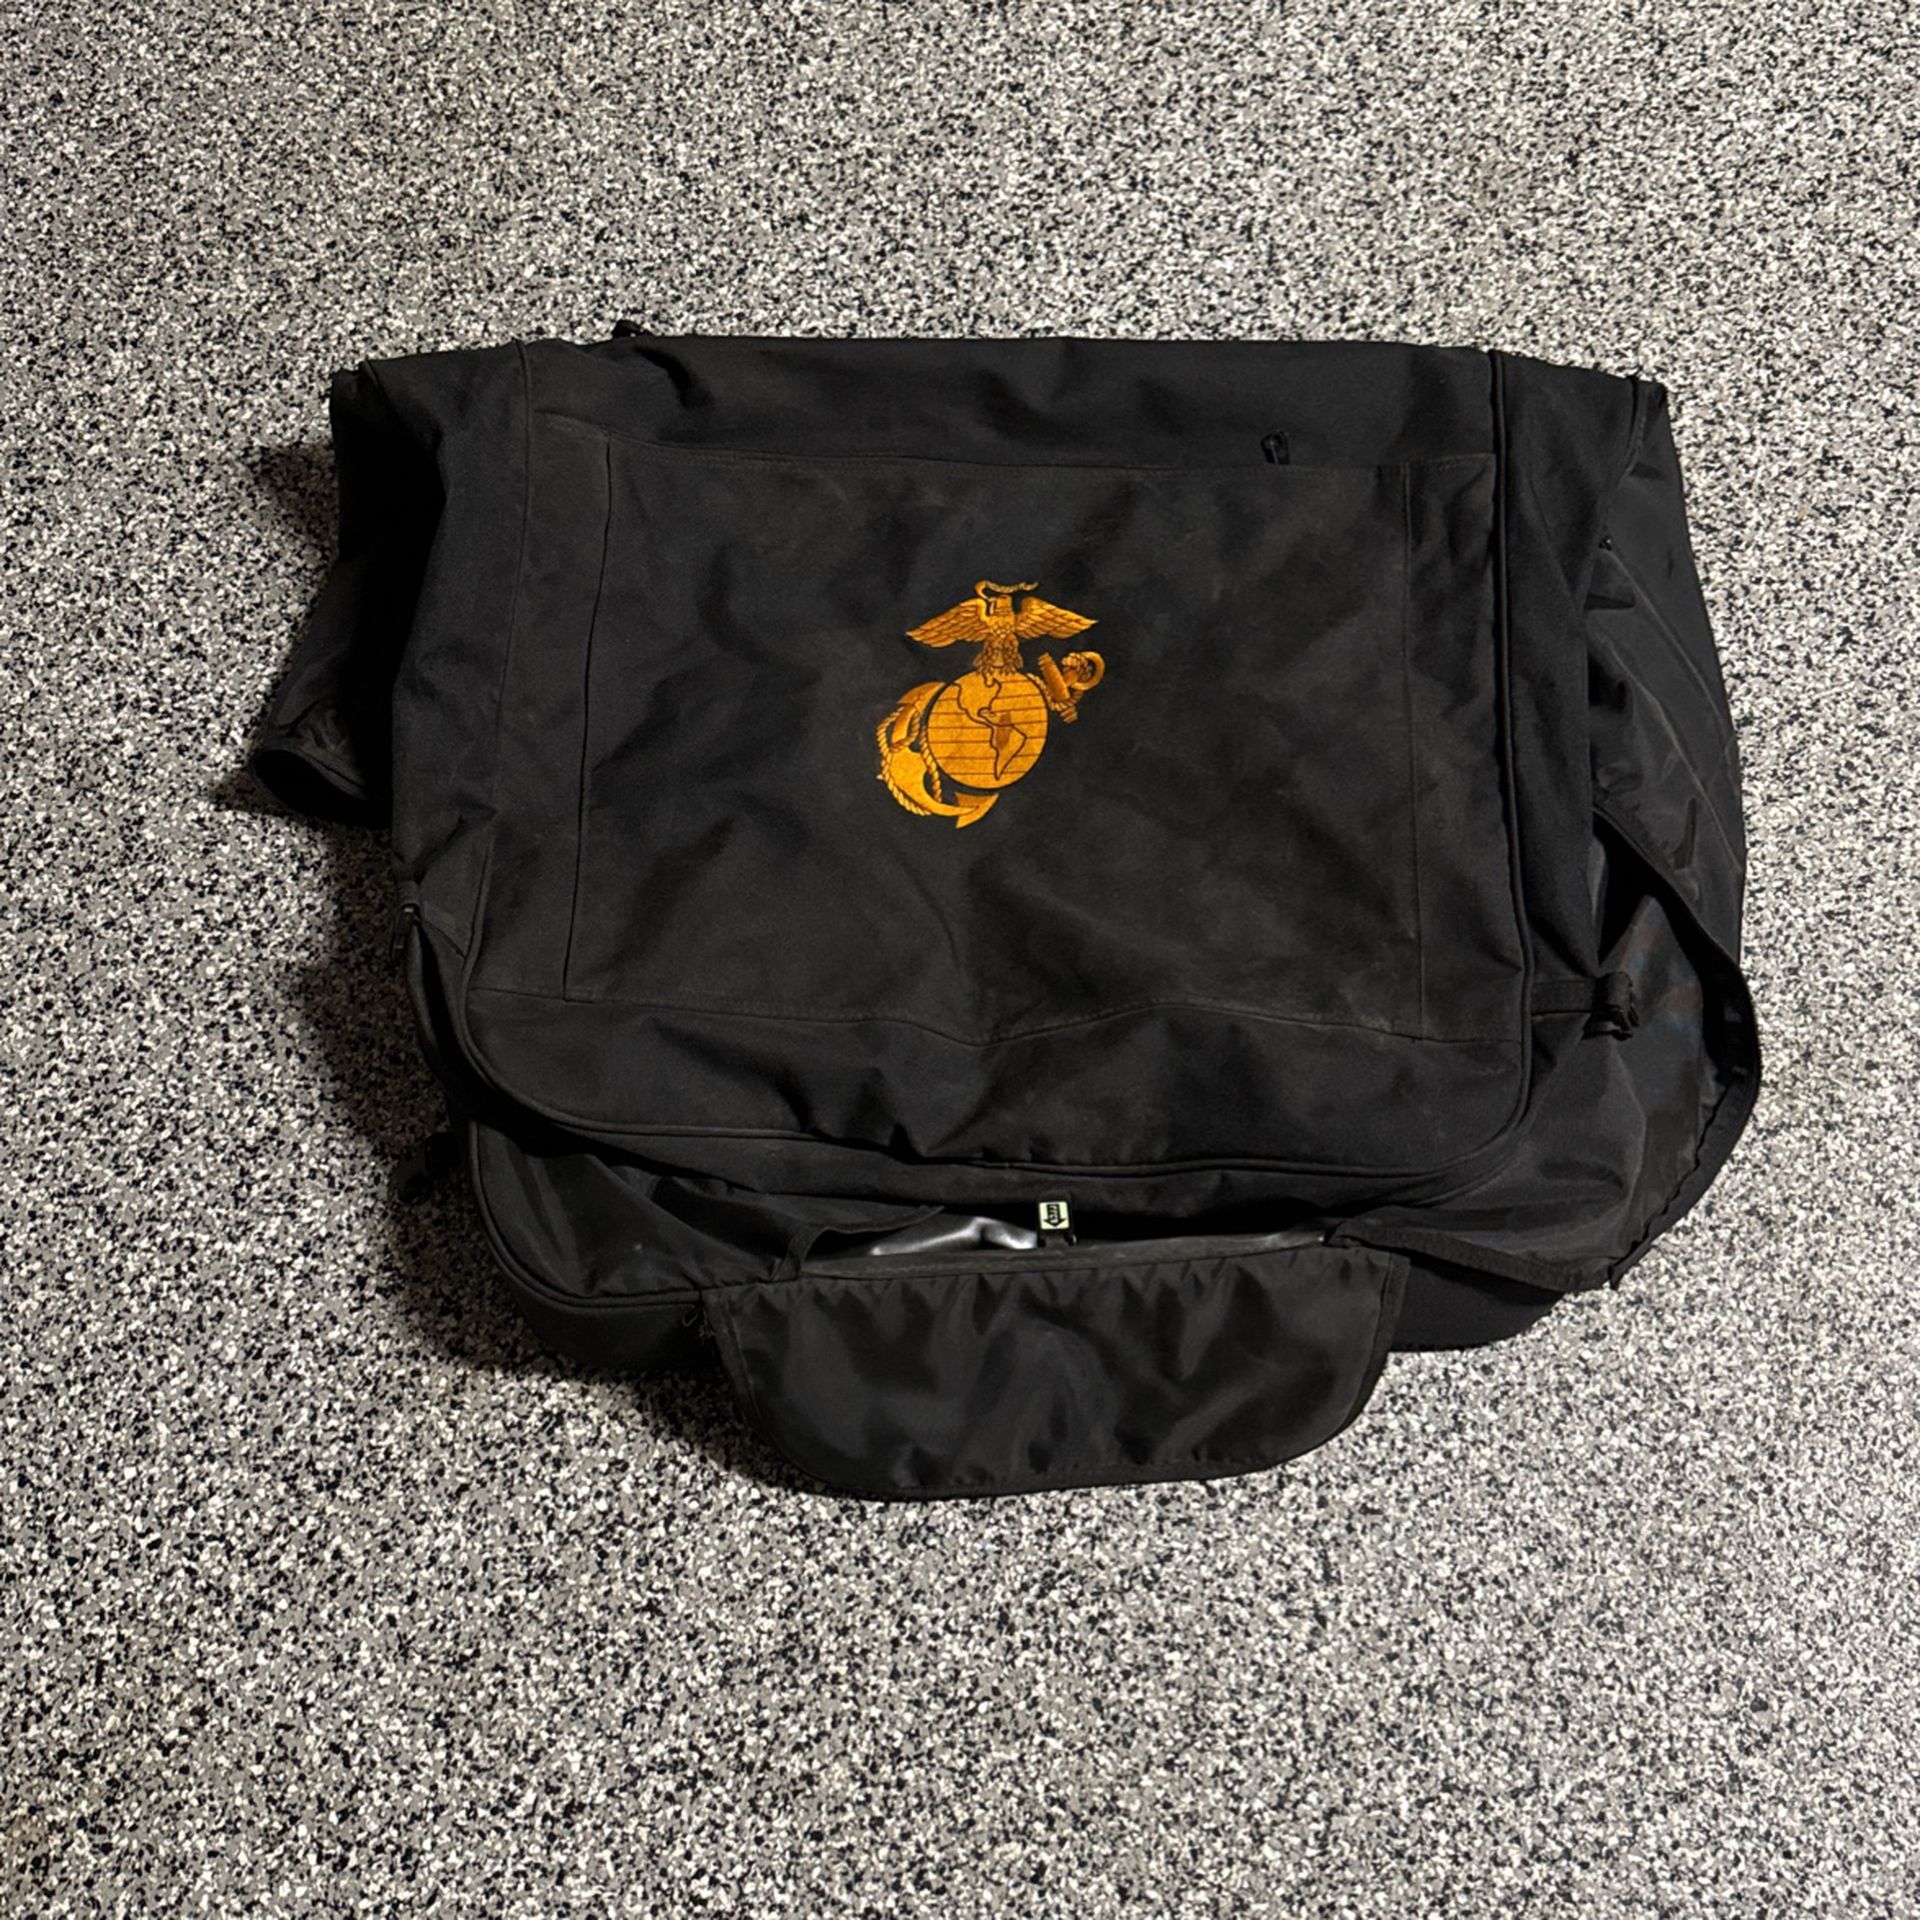 USMC Garment Bag